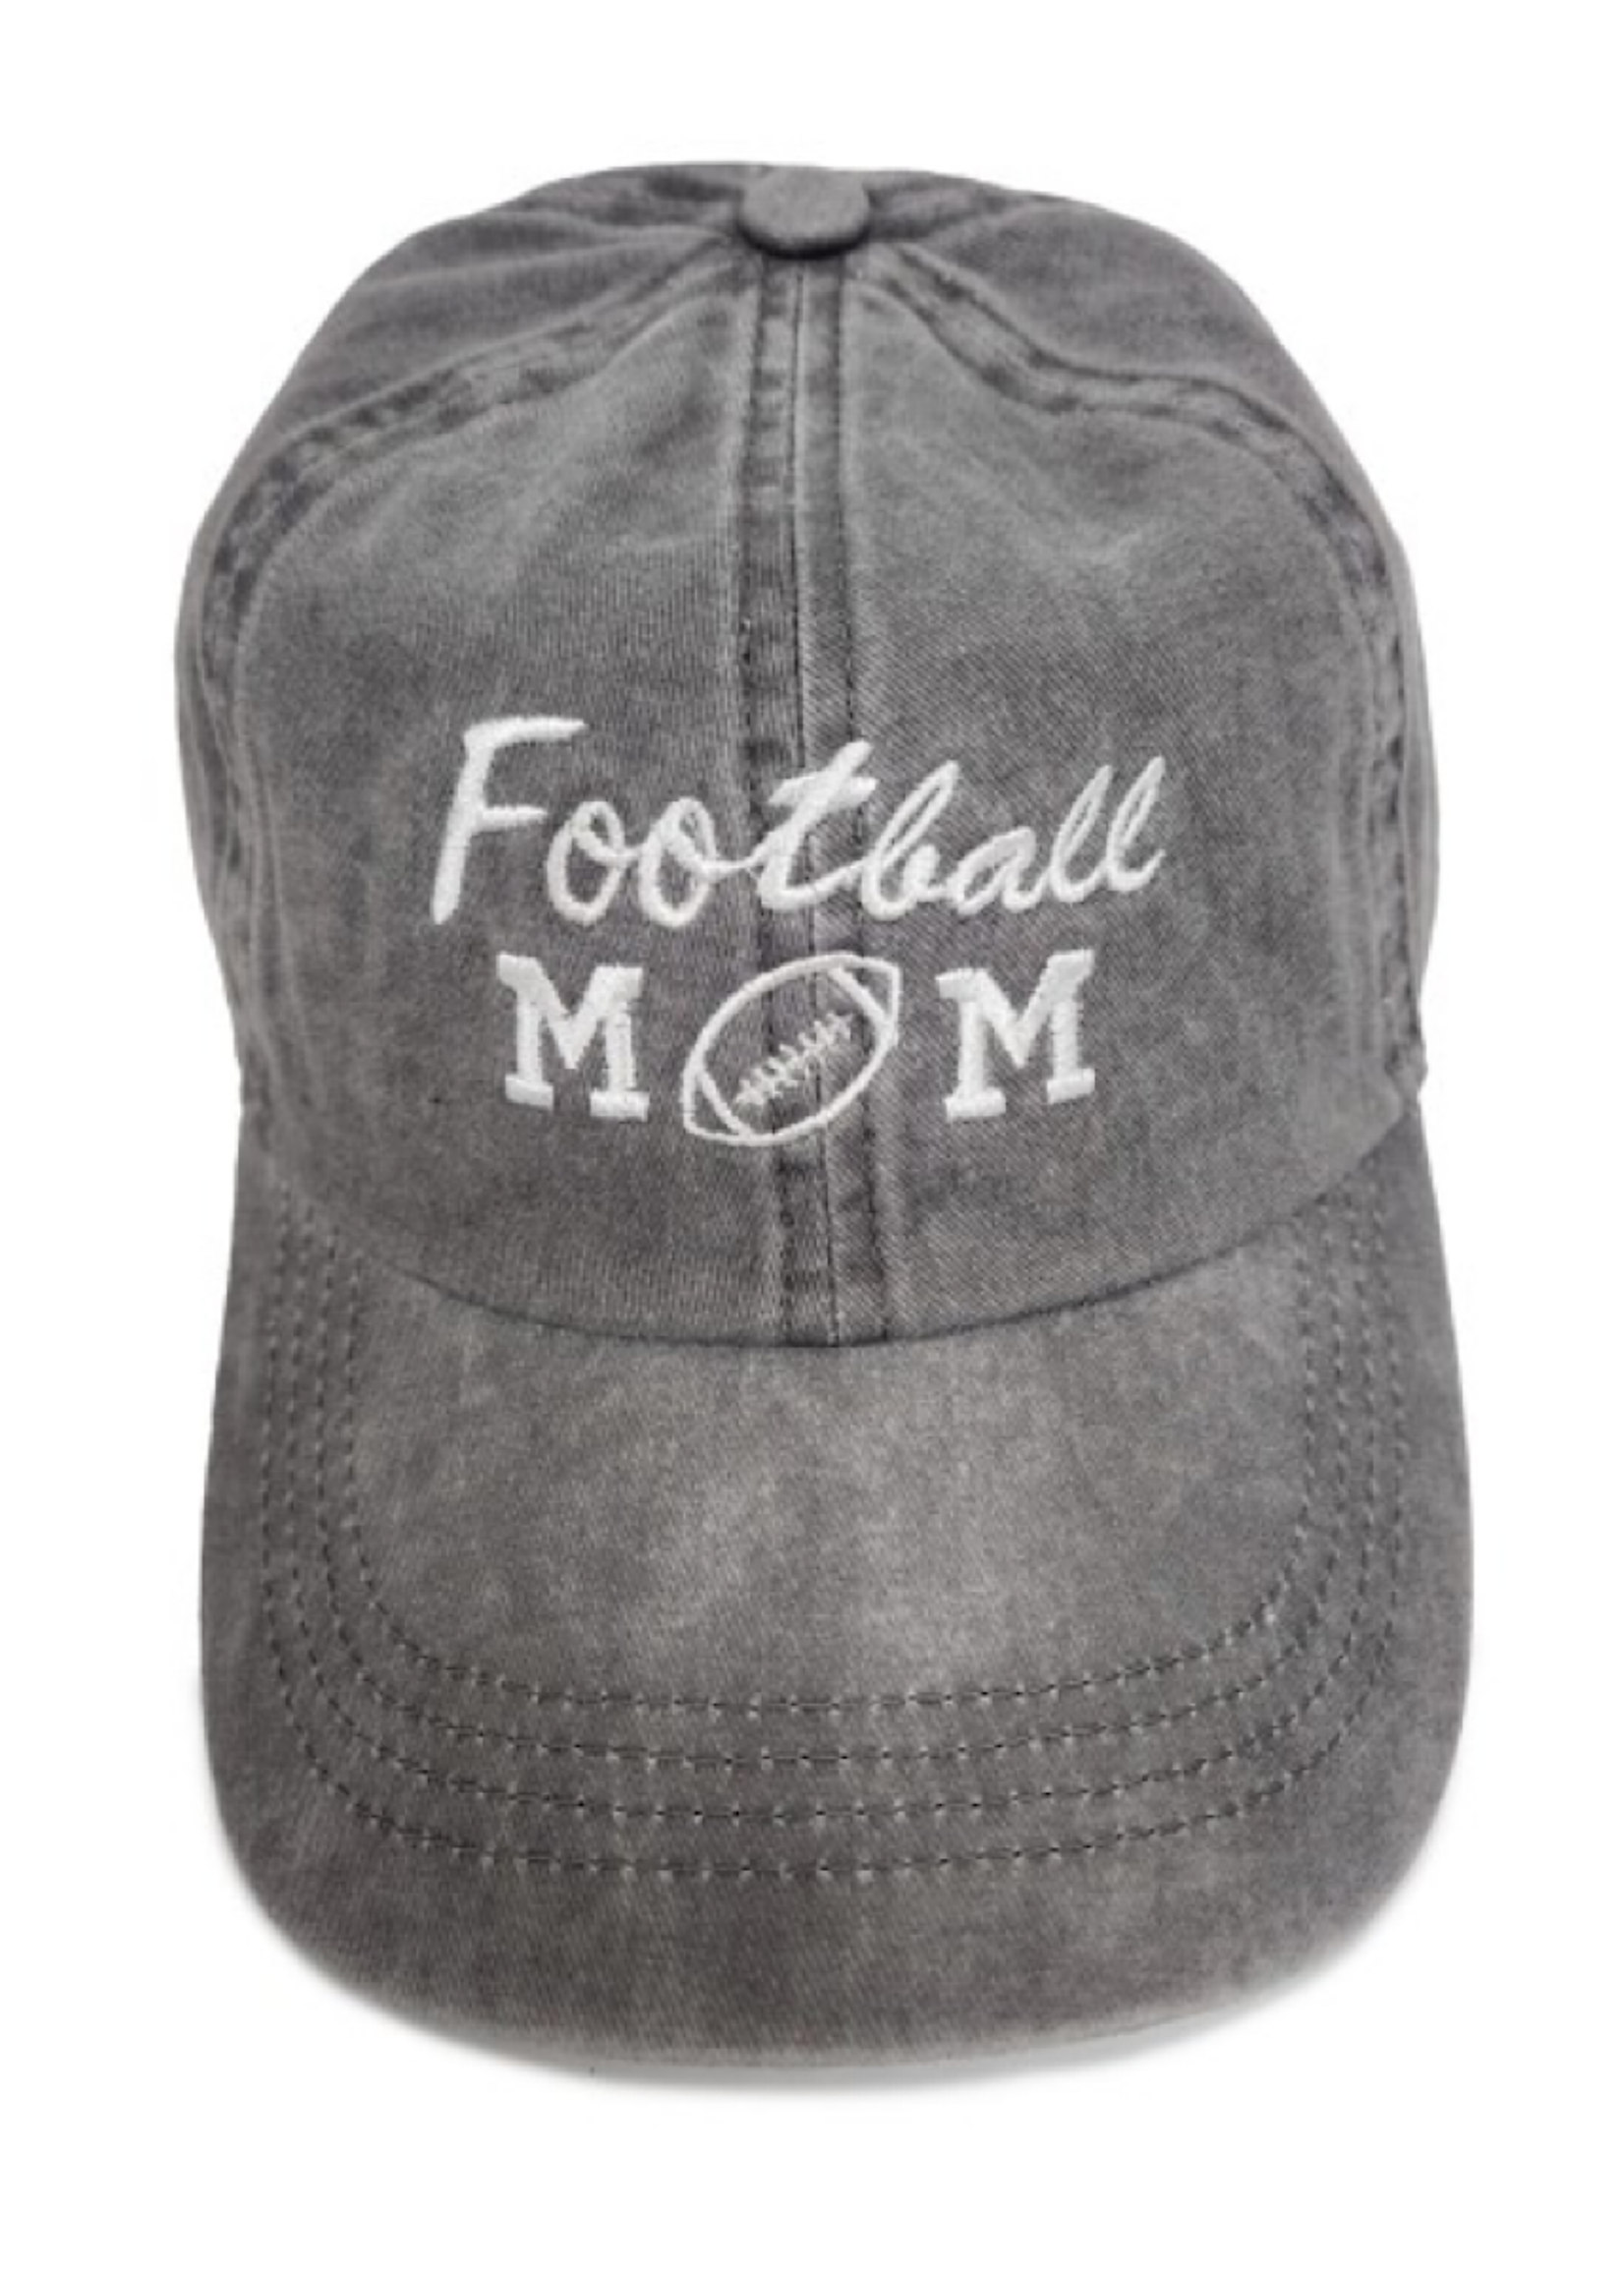 Football Mom Embroidered Baseball Cap